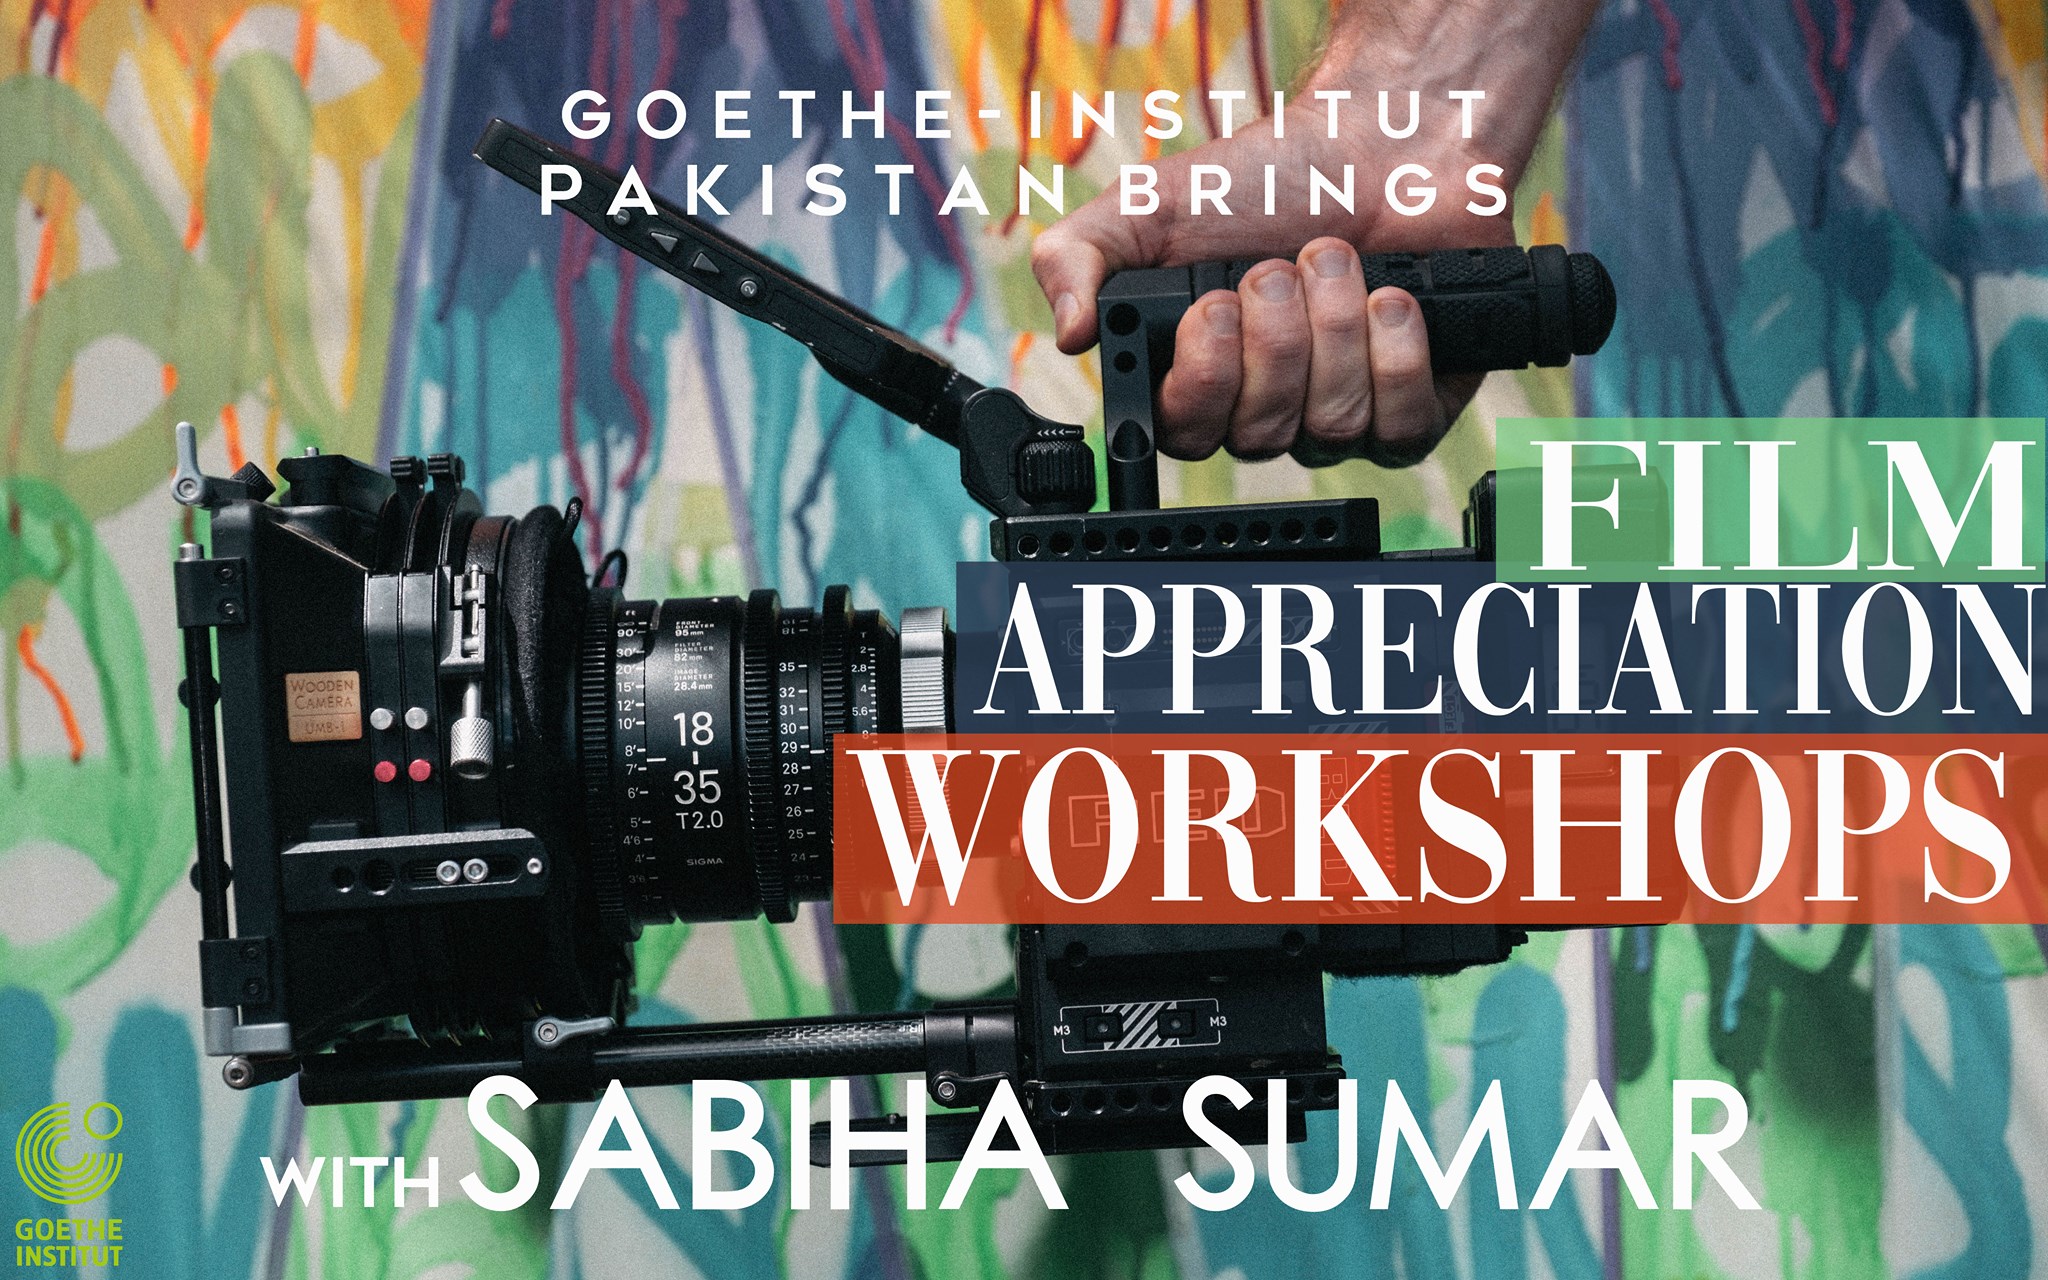 Sabiha sumar film appreciation workshop karachi